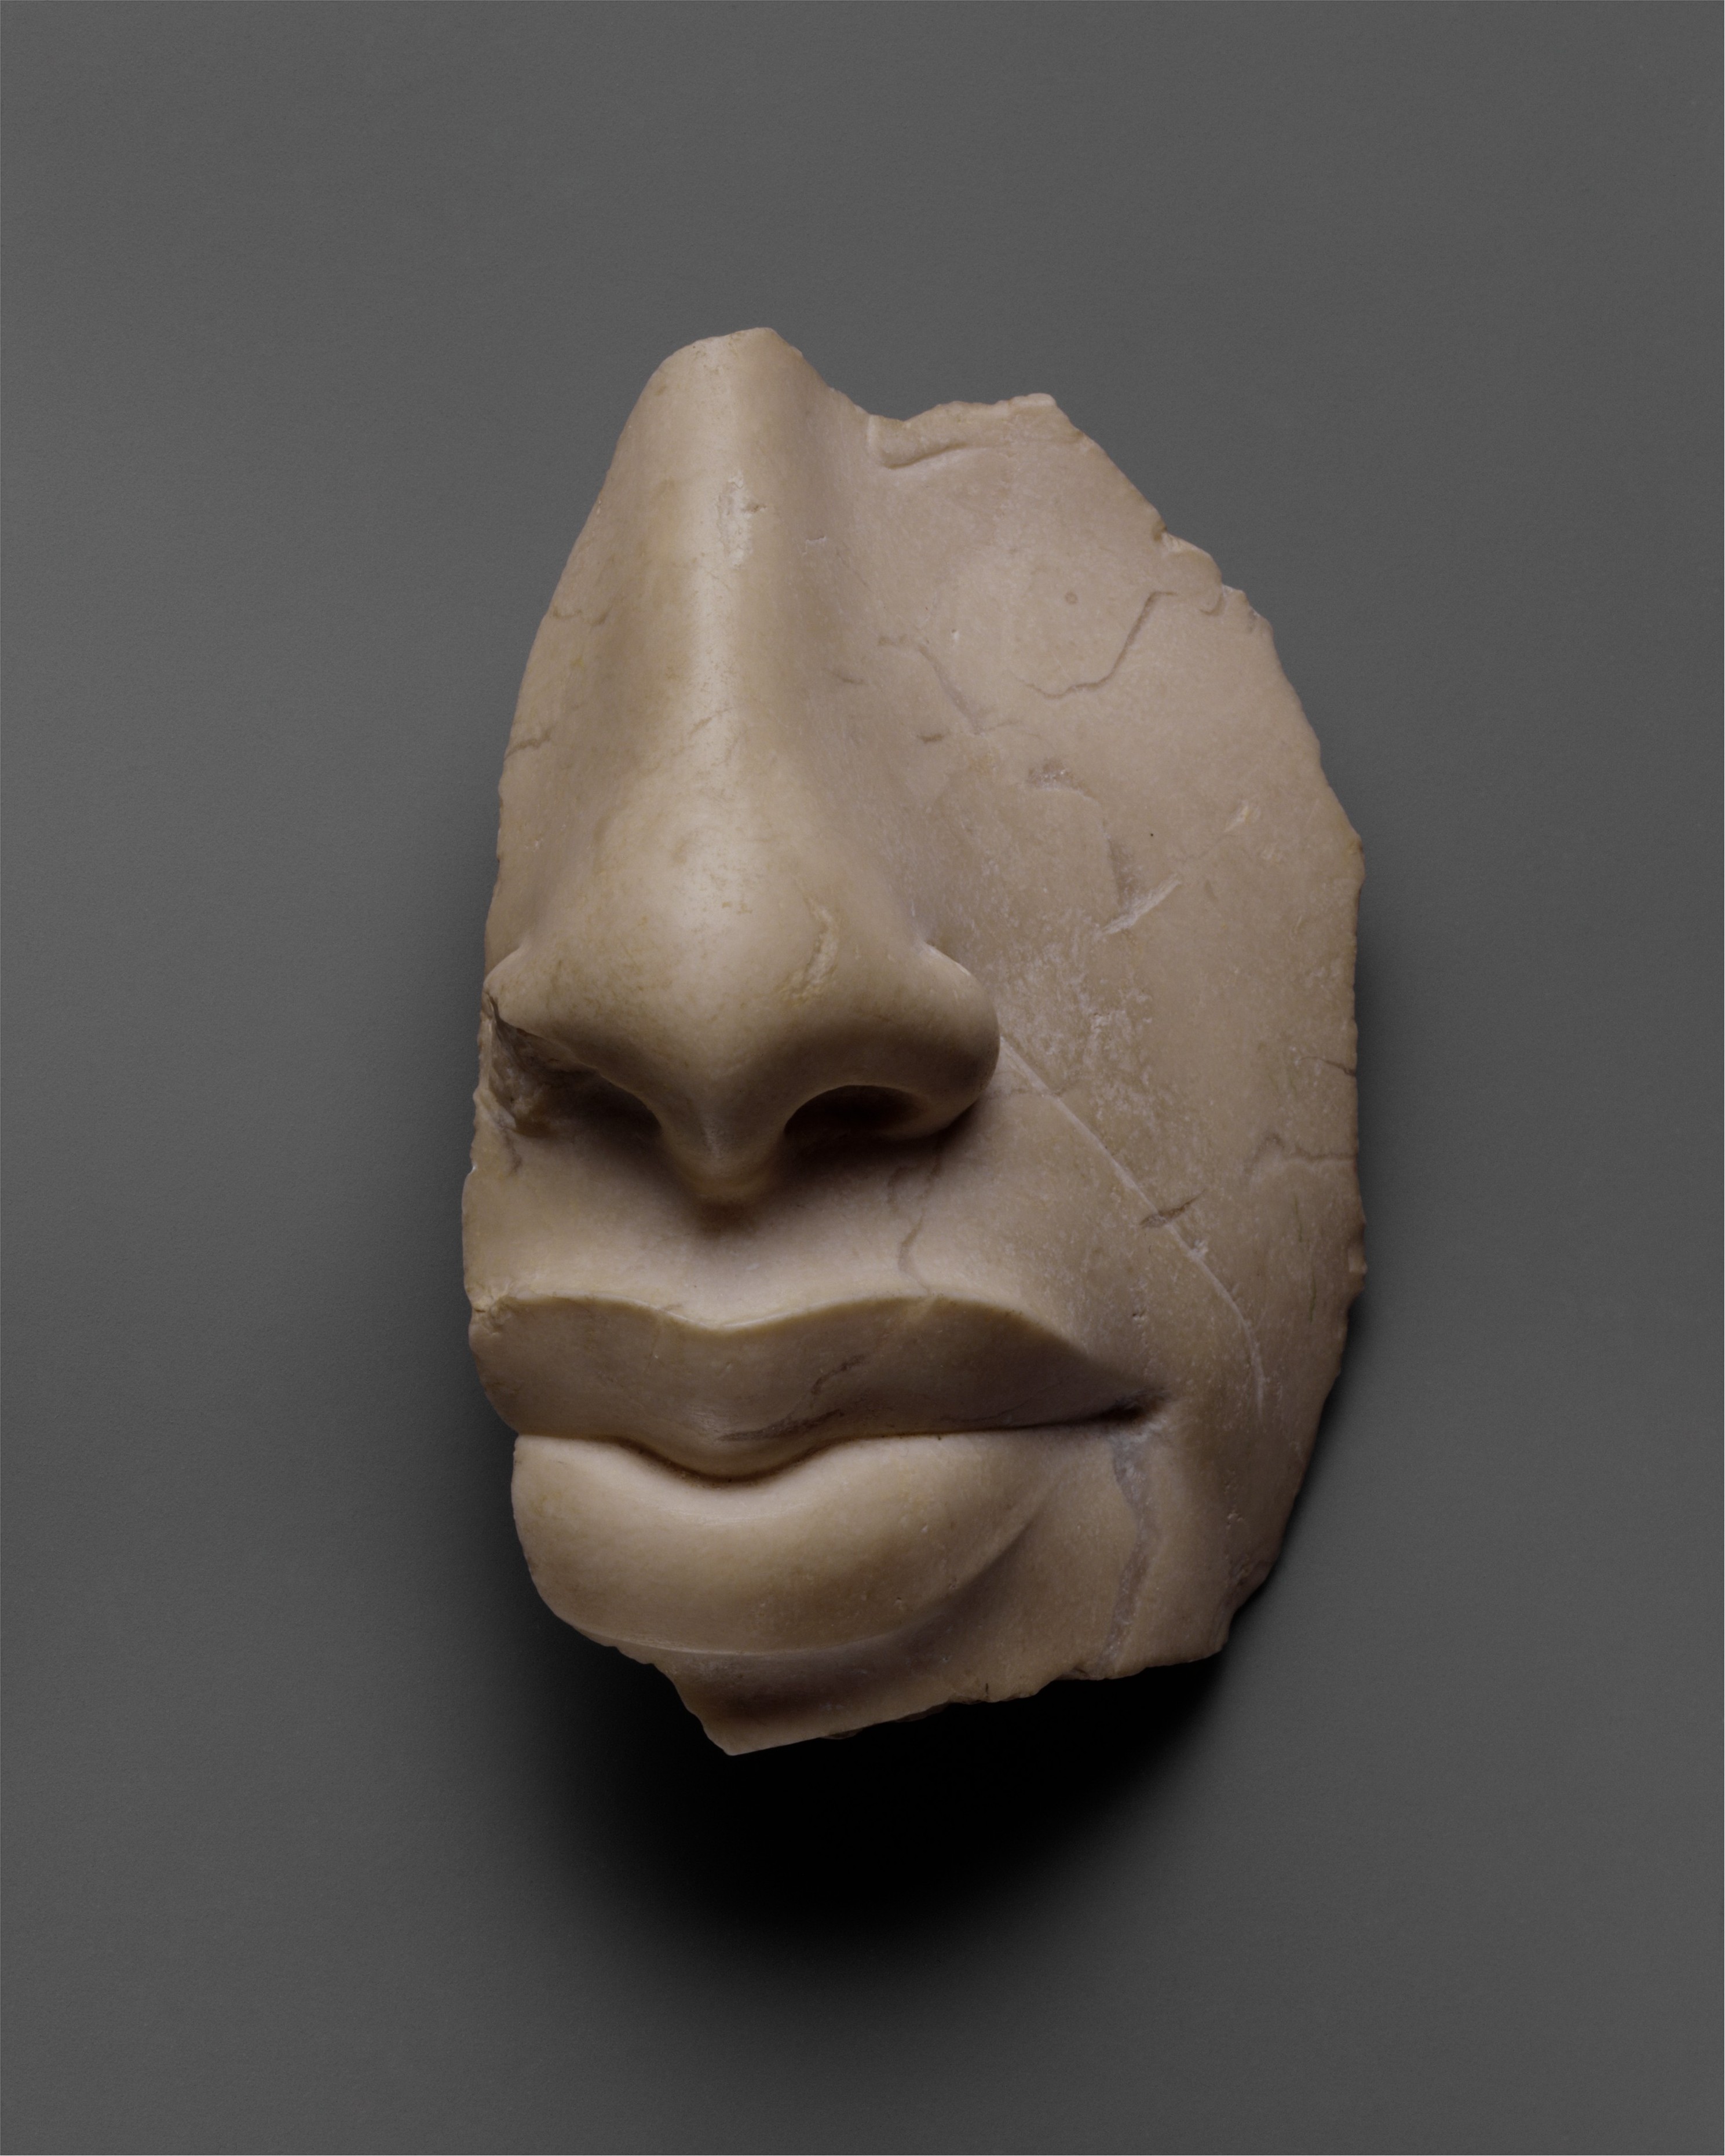 Nose and Lips of Akhenaten by Unknown Artist - ca. 1353–1336 B.C. - 8.1 x 6.3 x 5.5 cm Metropolitan Museum of Art